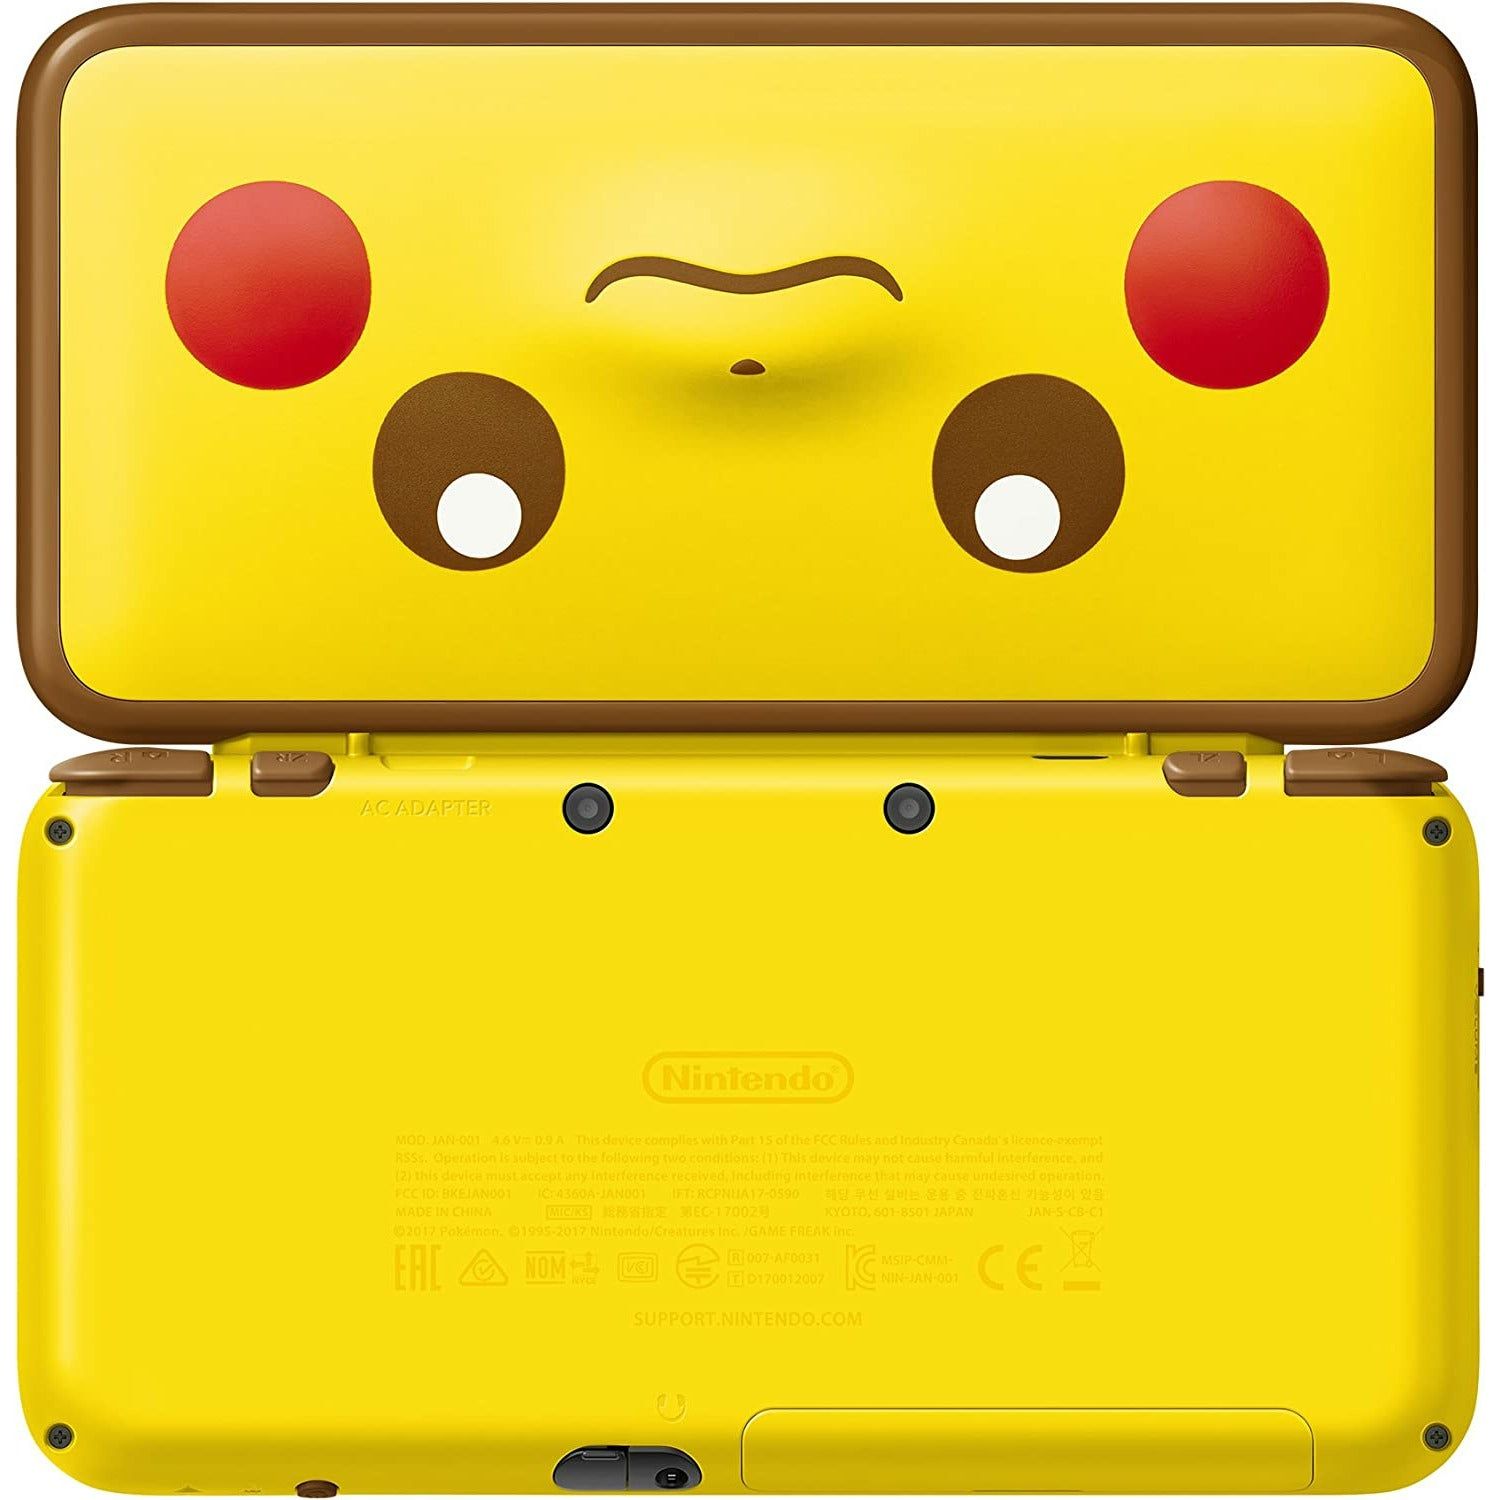 *New* 2DSXL System - Pikachu Edition